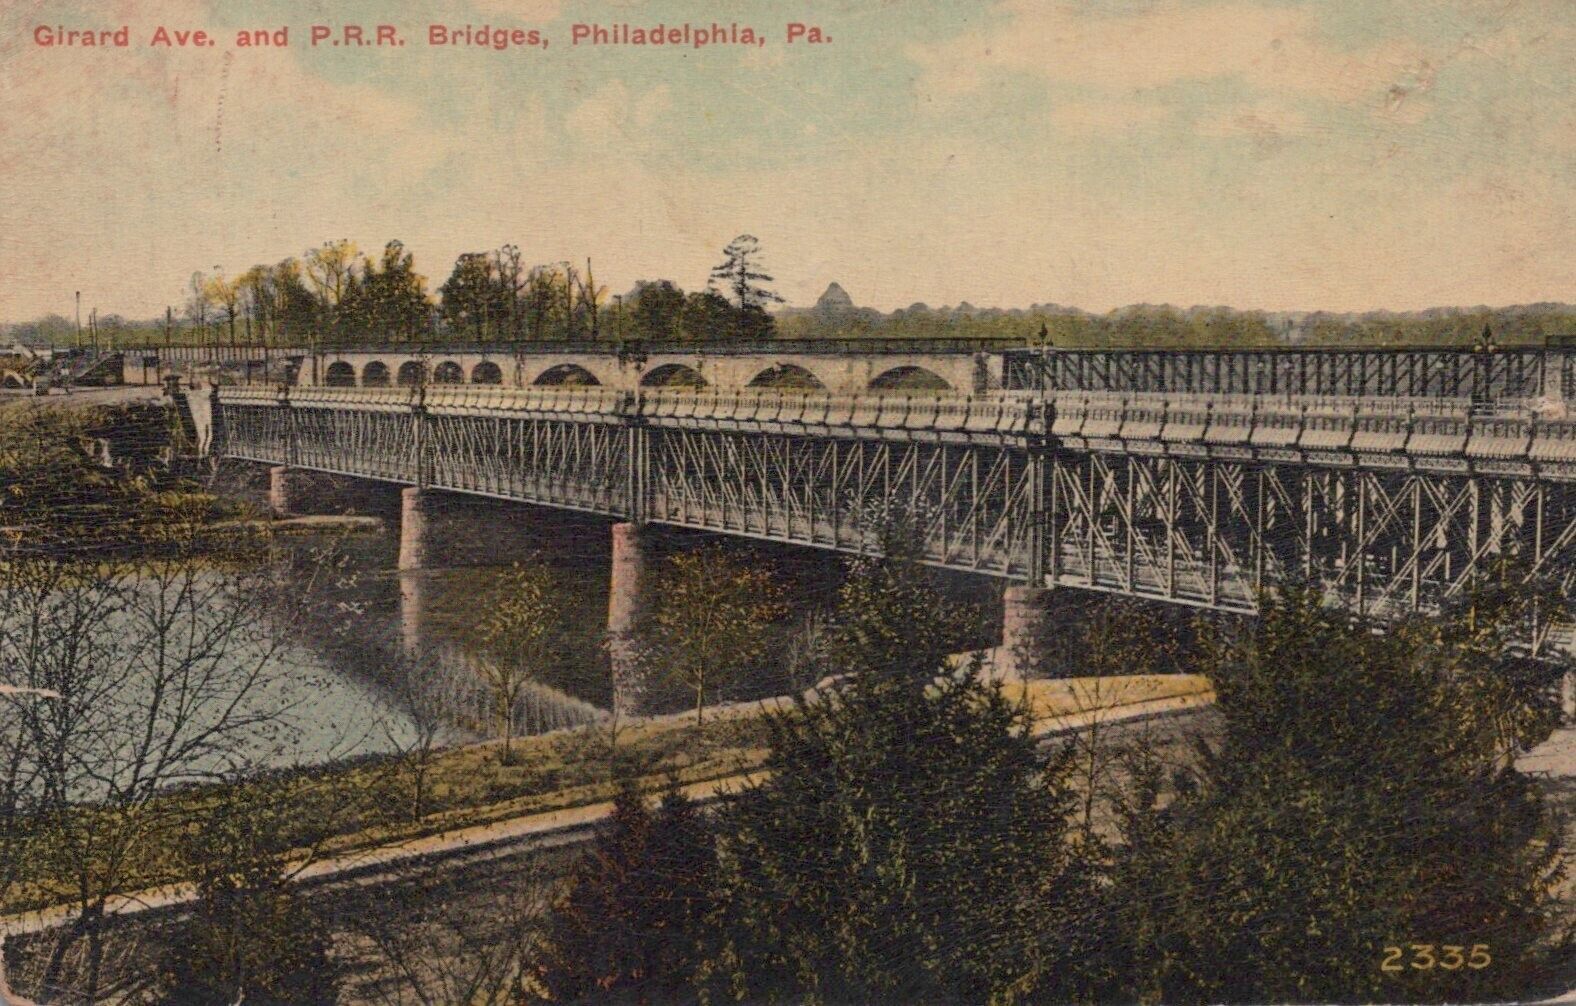 Girard Avenue and Pennsylvania Railroad ( PRR ) bridge in Philadelphia PA